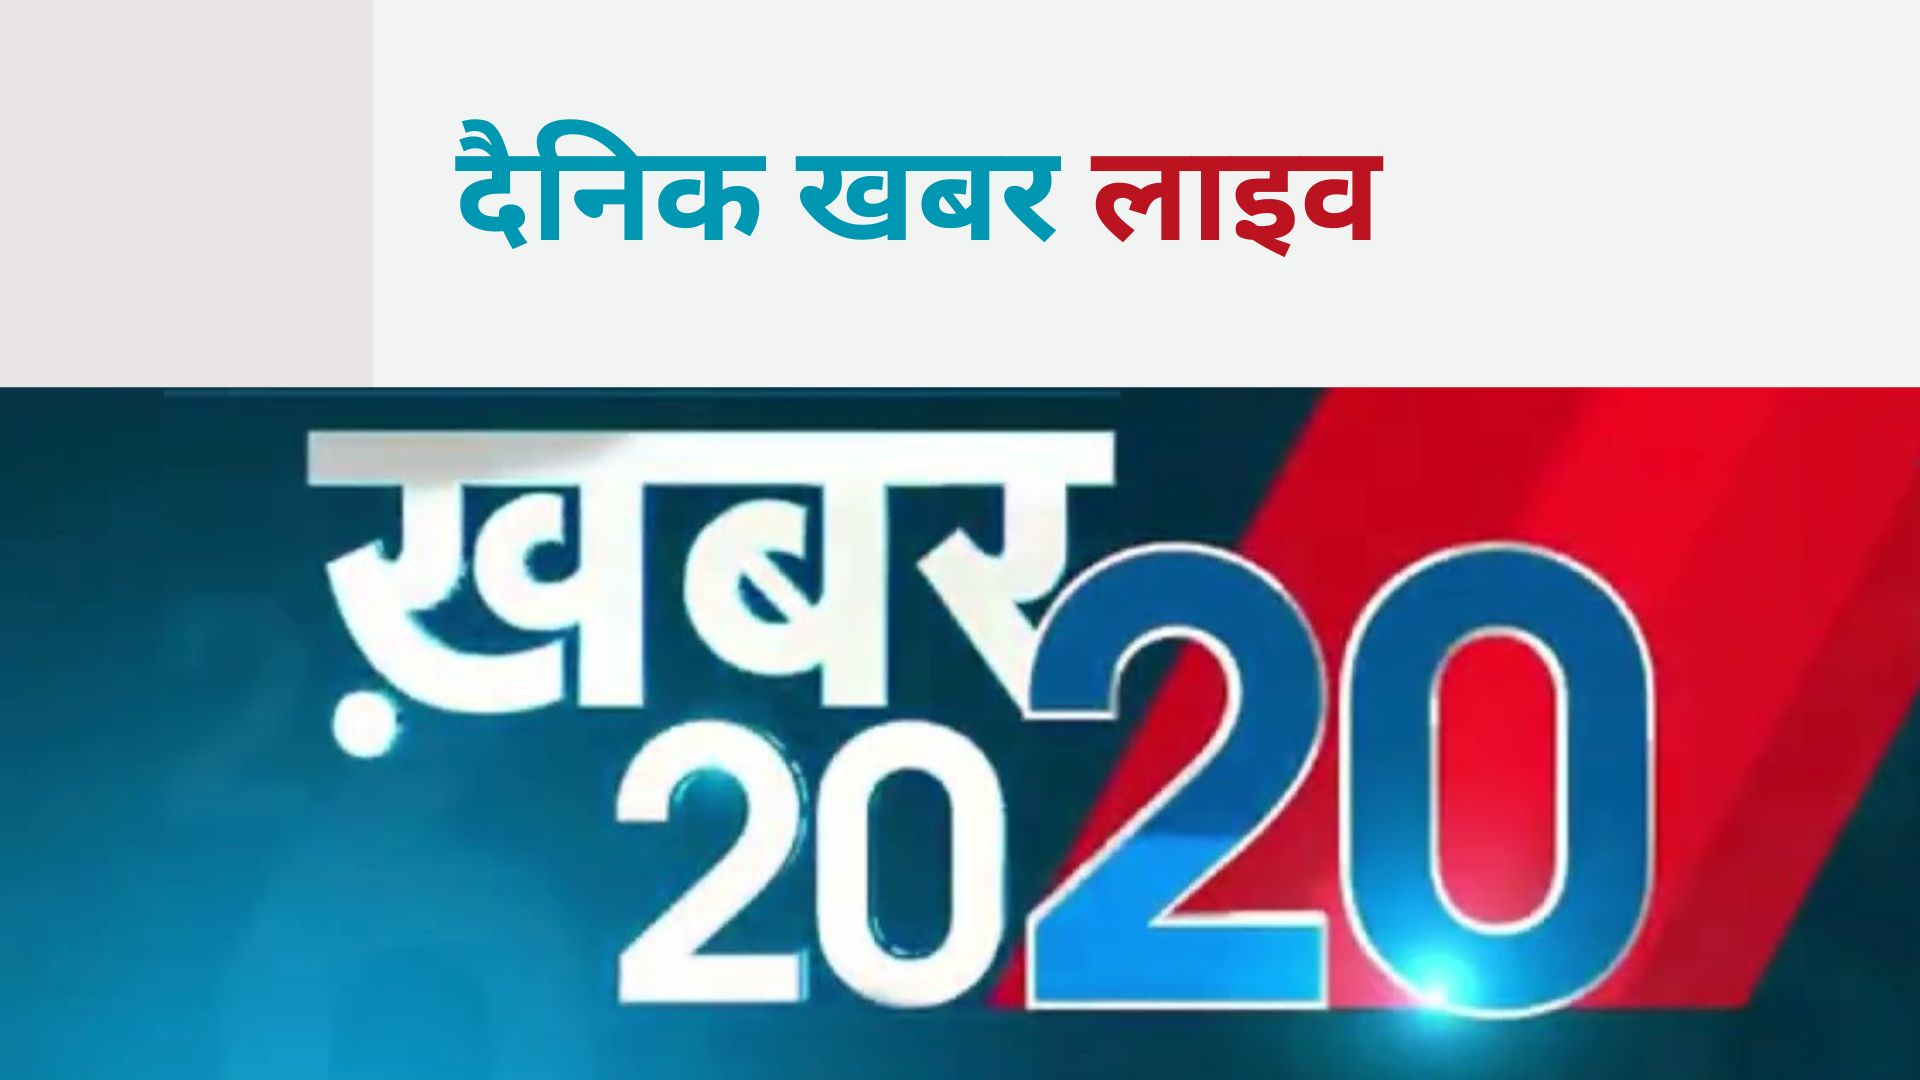 Top 20 UP News In Hindi, Top 20 की ताज़ा ख़बर, ब्रेकिंग न्यूज़ | TheAmberPost